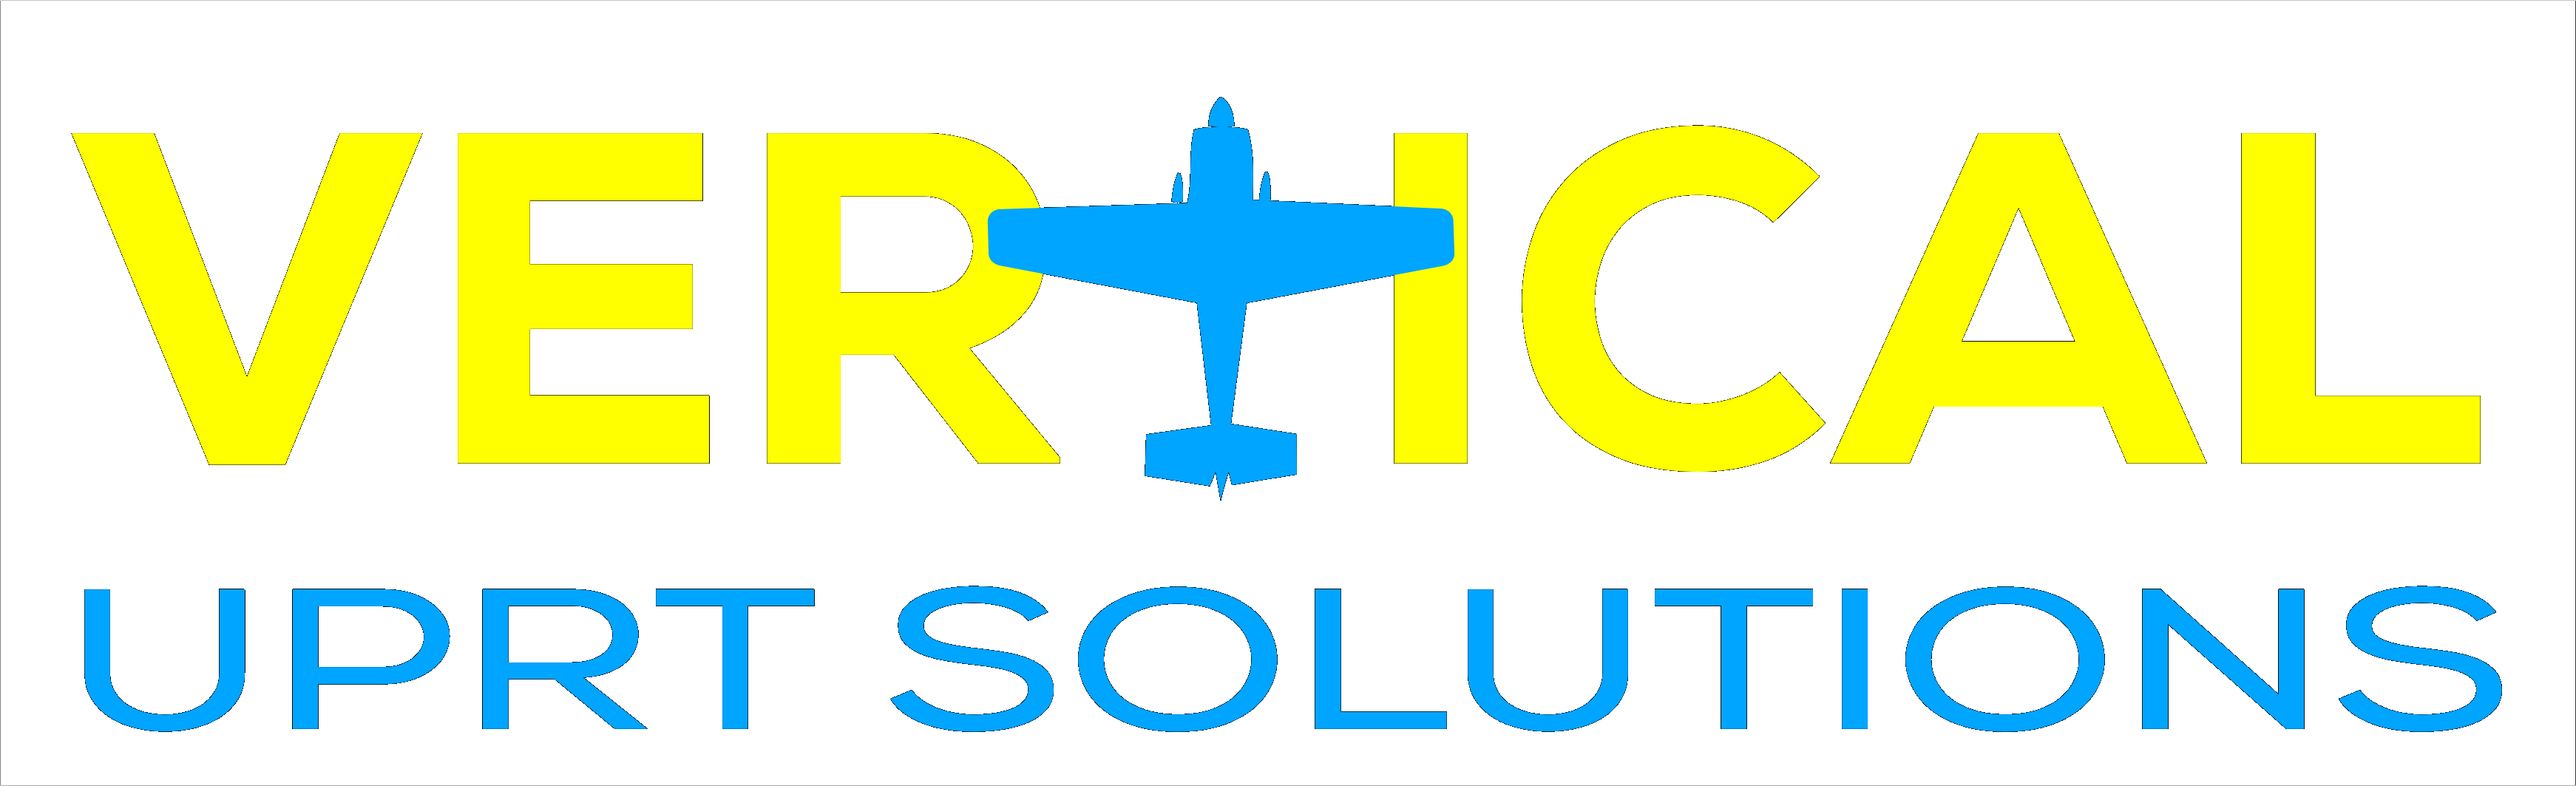 Vertical UPRT Solutions - Advanced professional pilot training